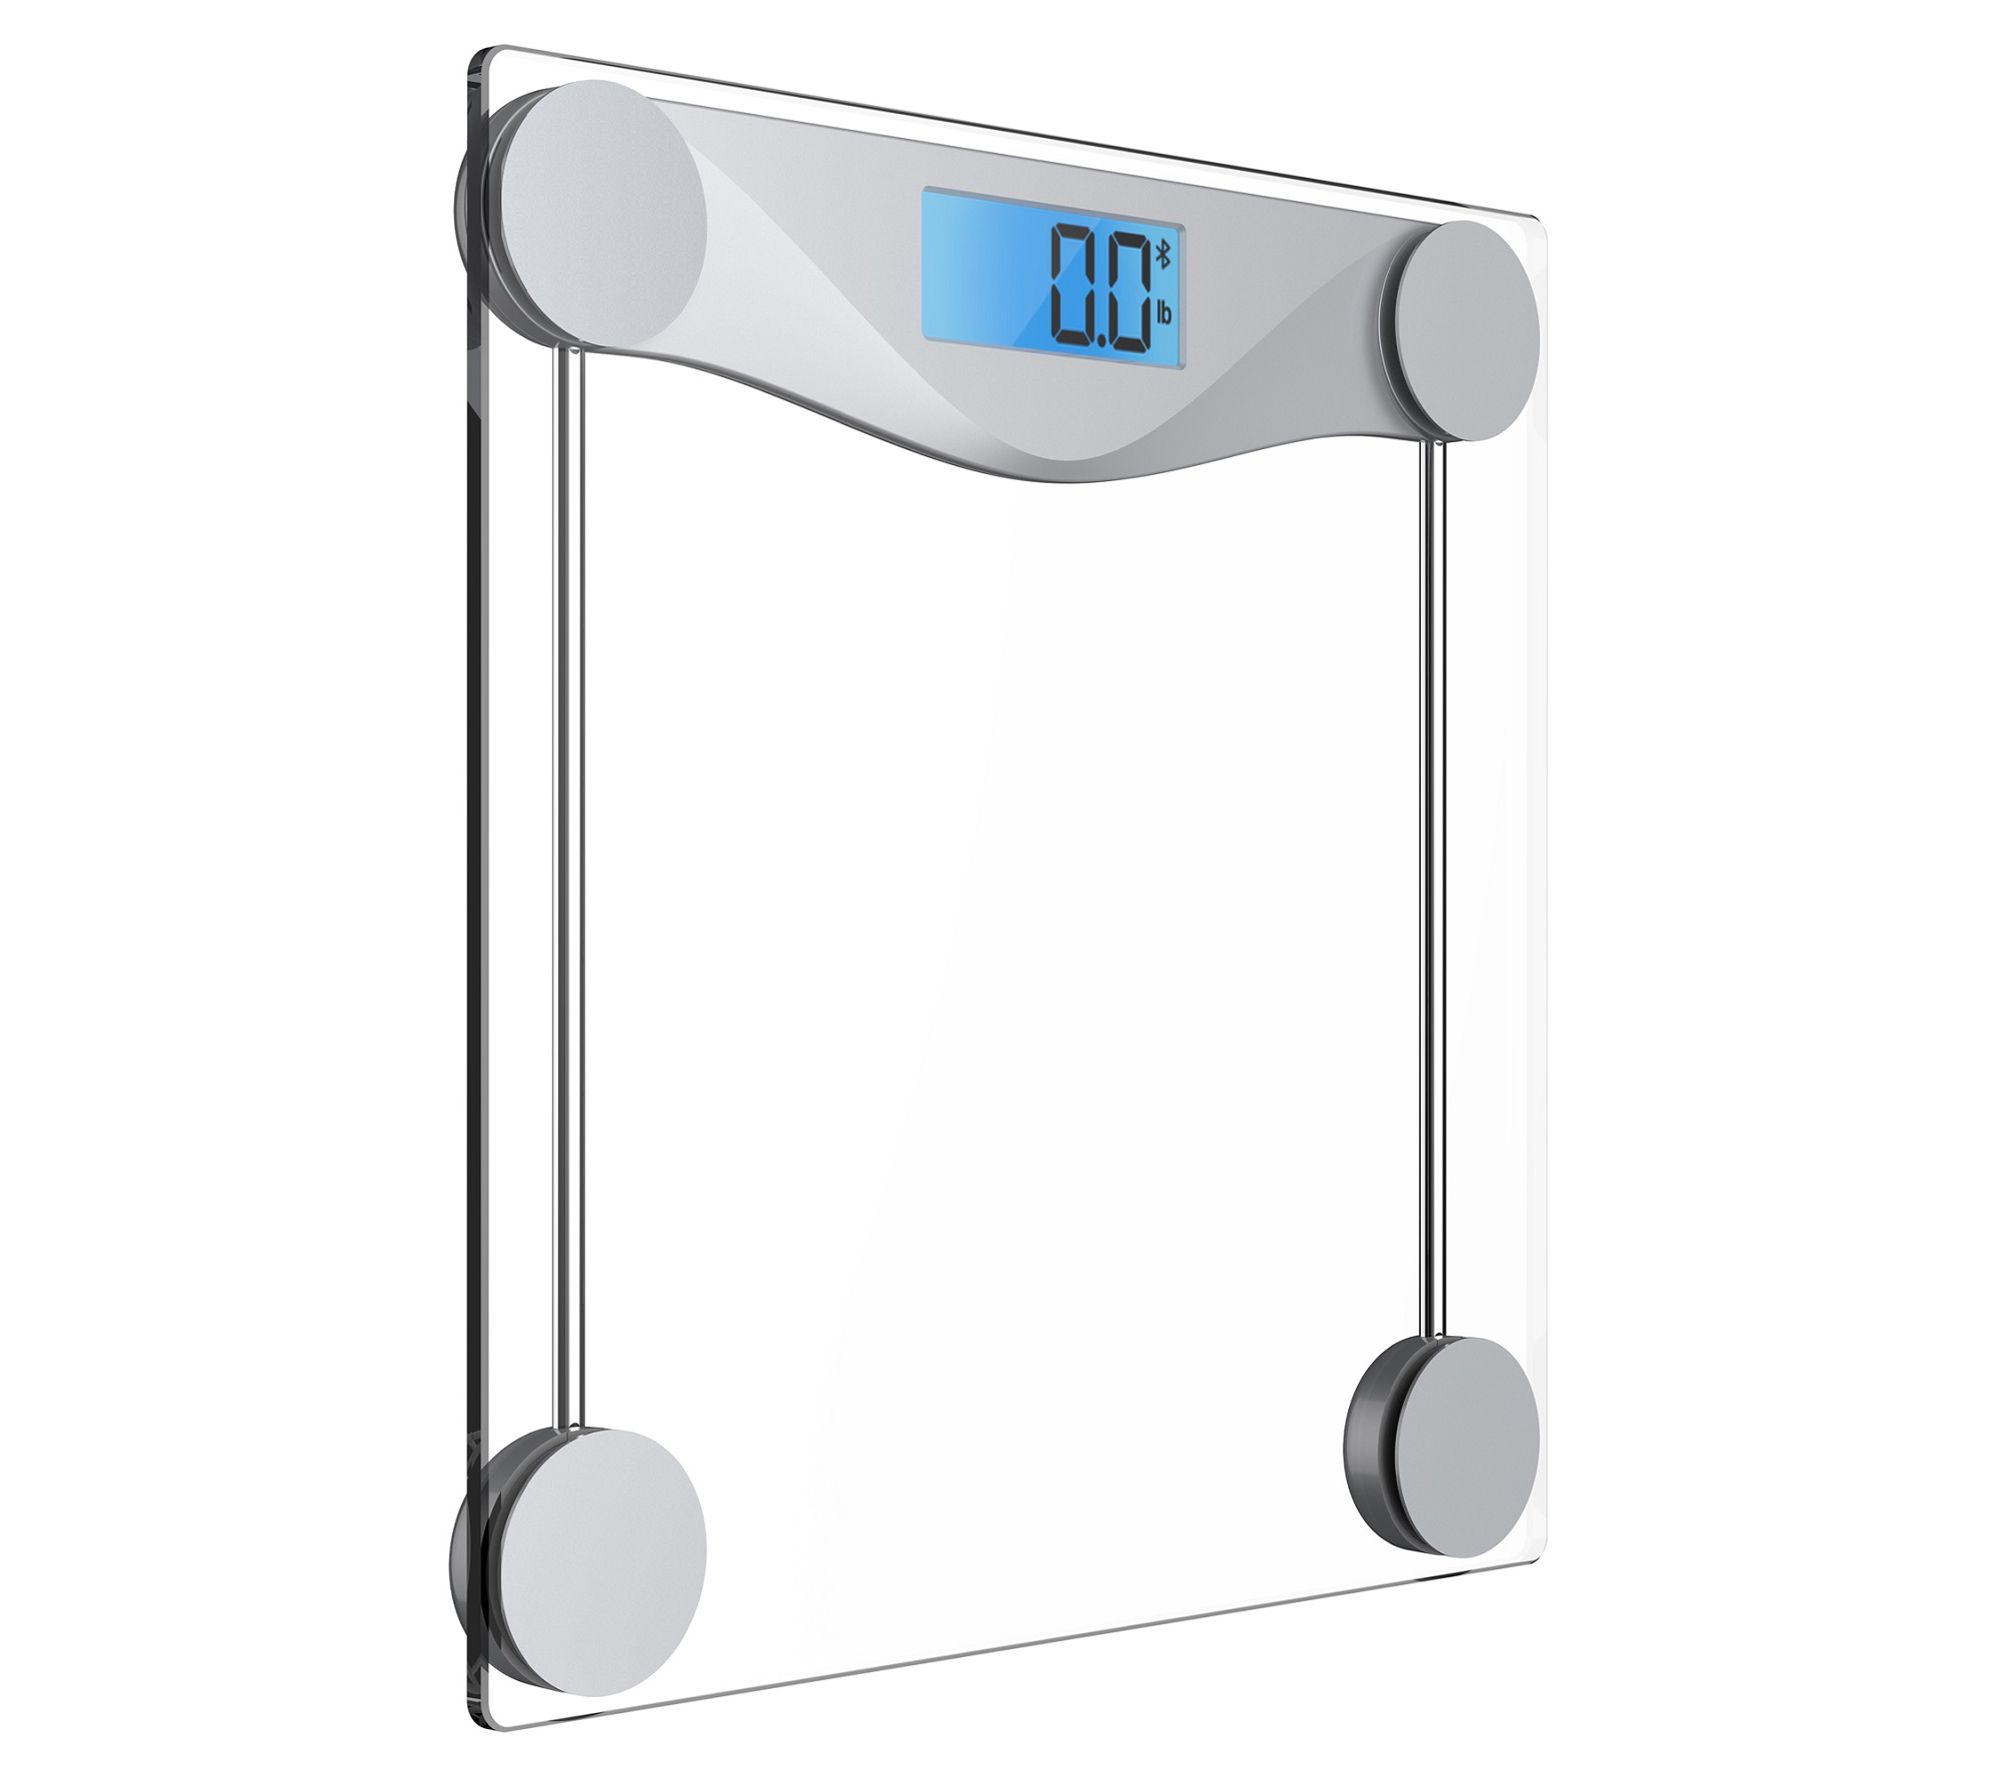 Smart Glass Body Weight Scale with Digital Display - Etekcity